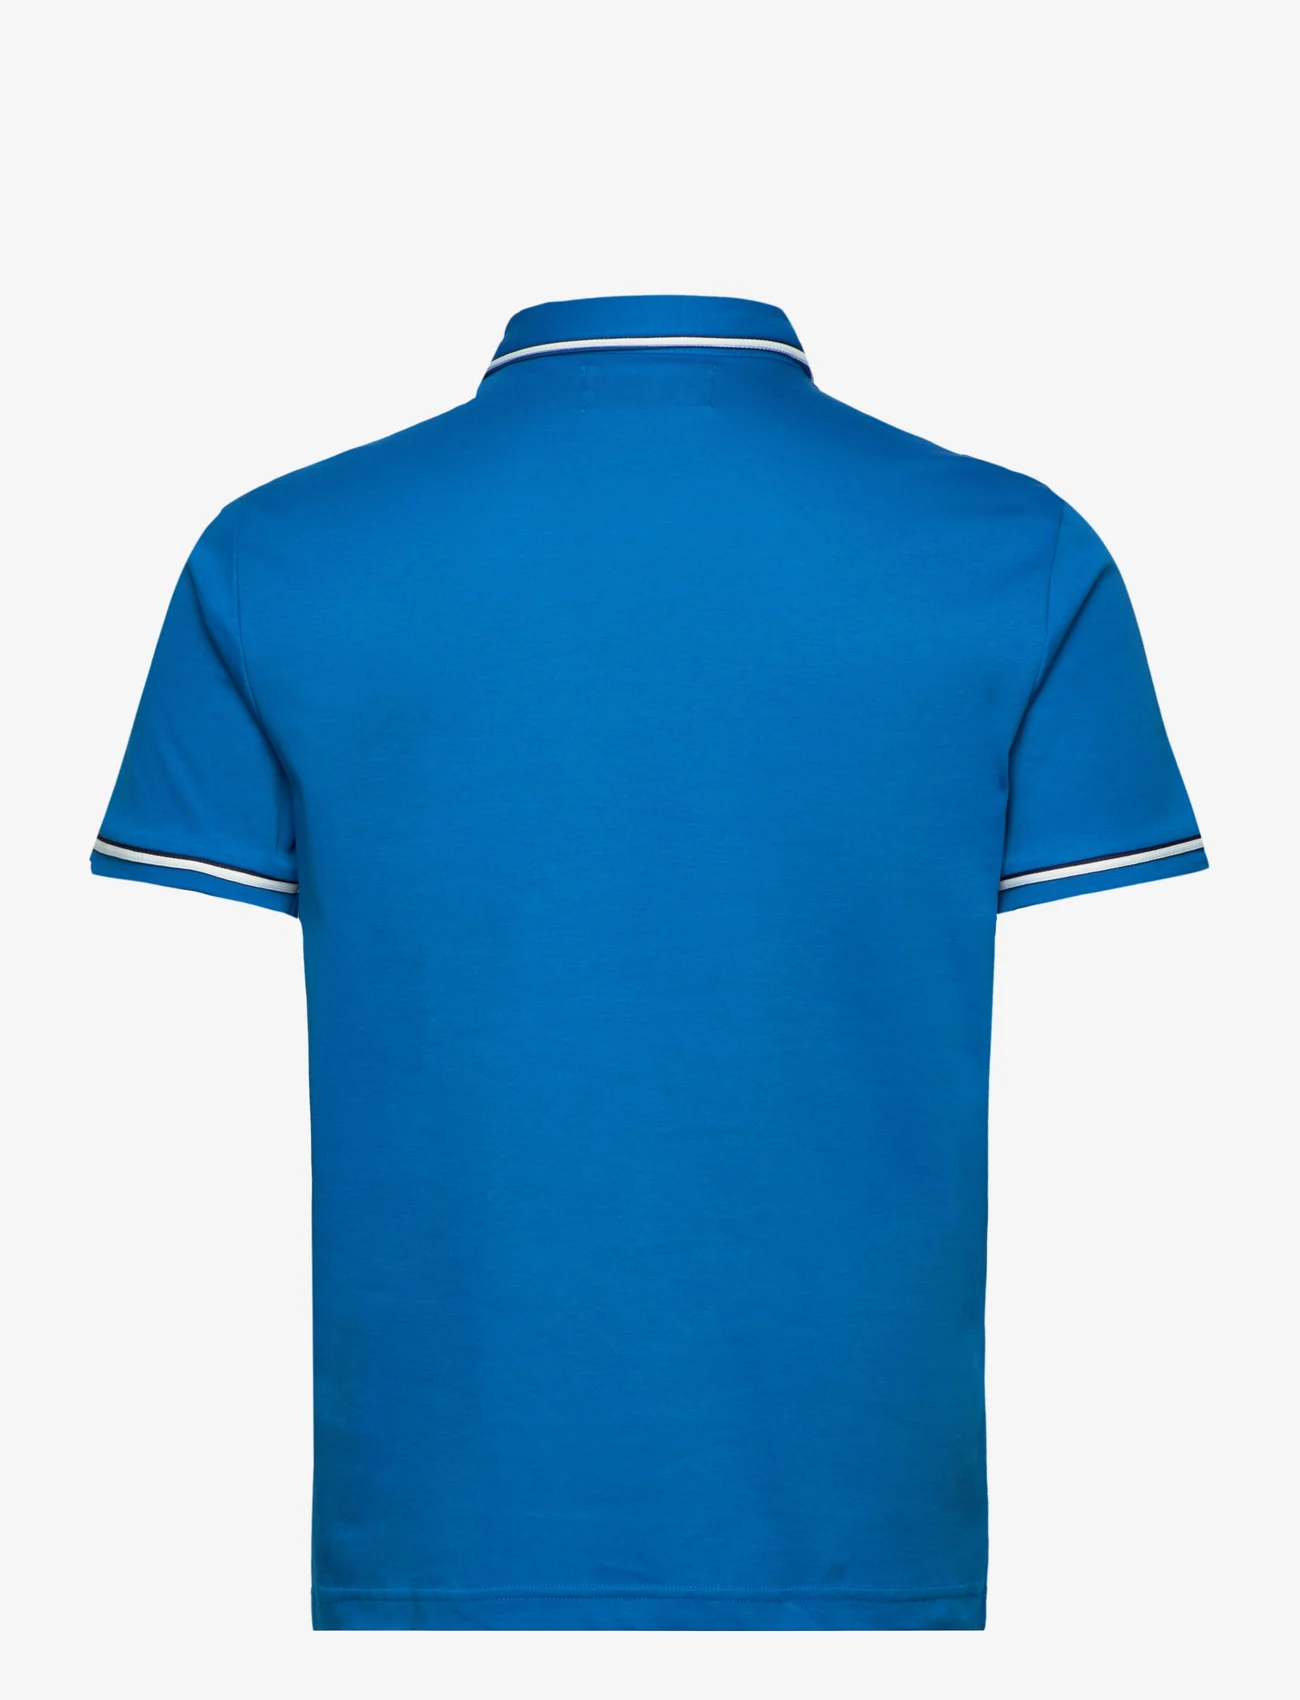 Original Penguin - EARL ORG INT 3D STIC - polo marškinėliai trumpomis rankovėmis - imperial blue - 1